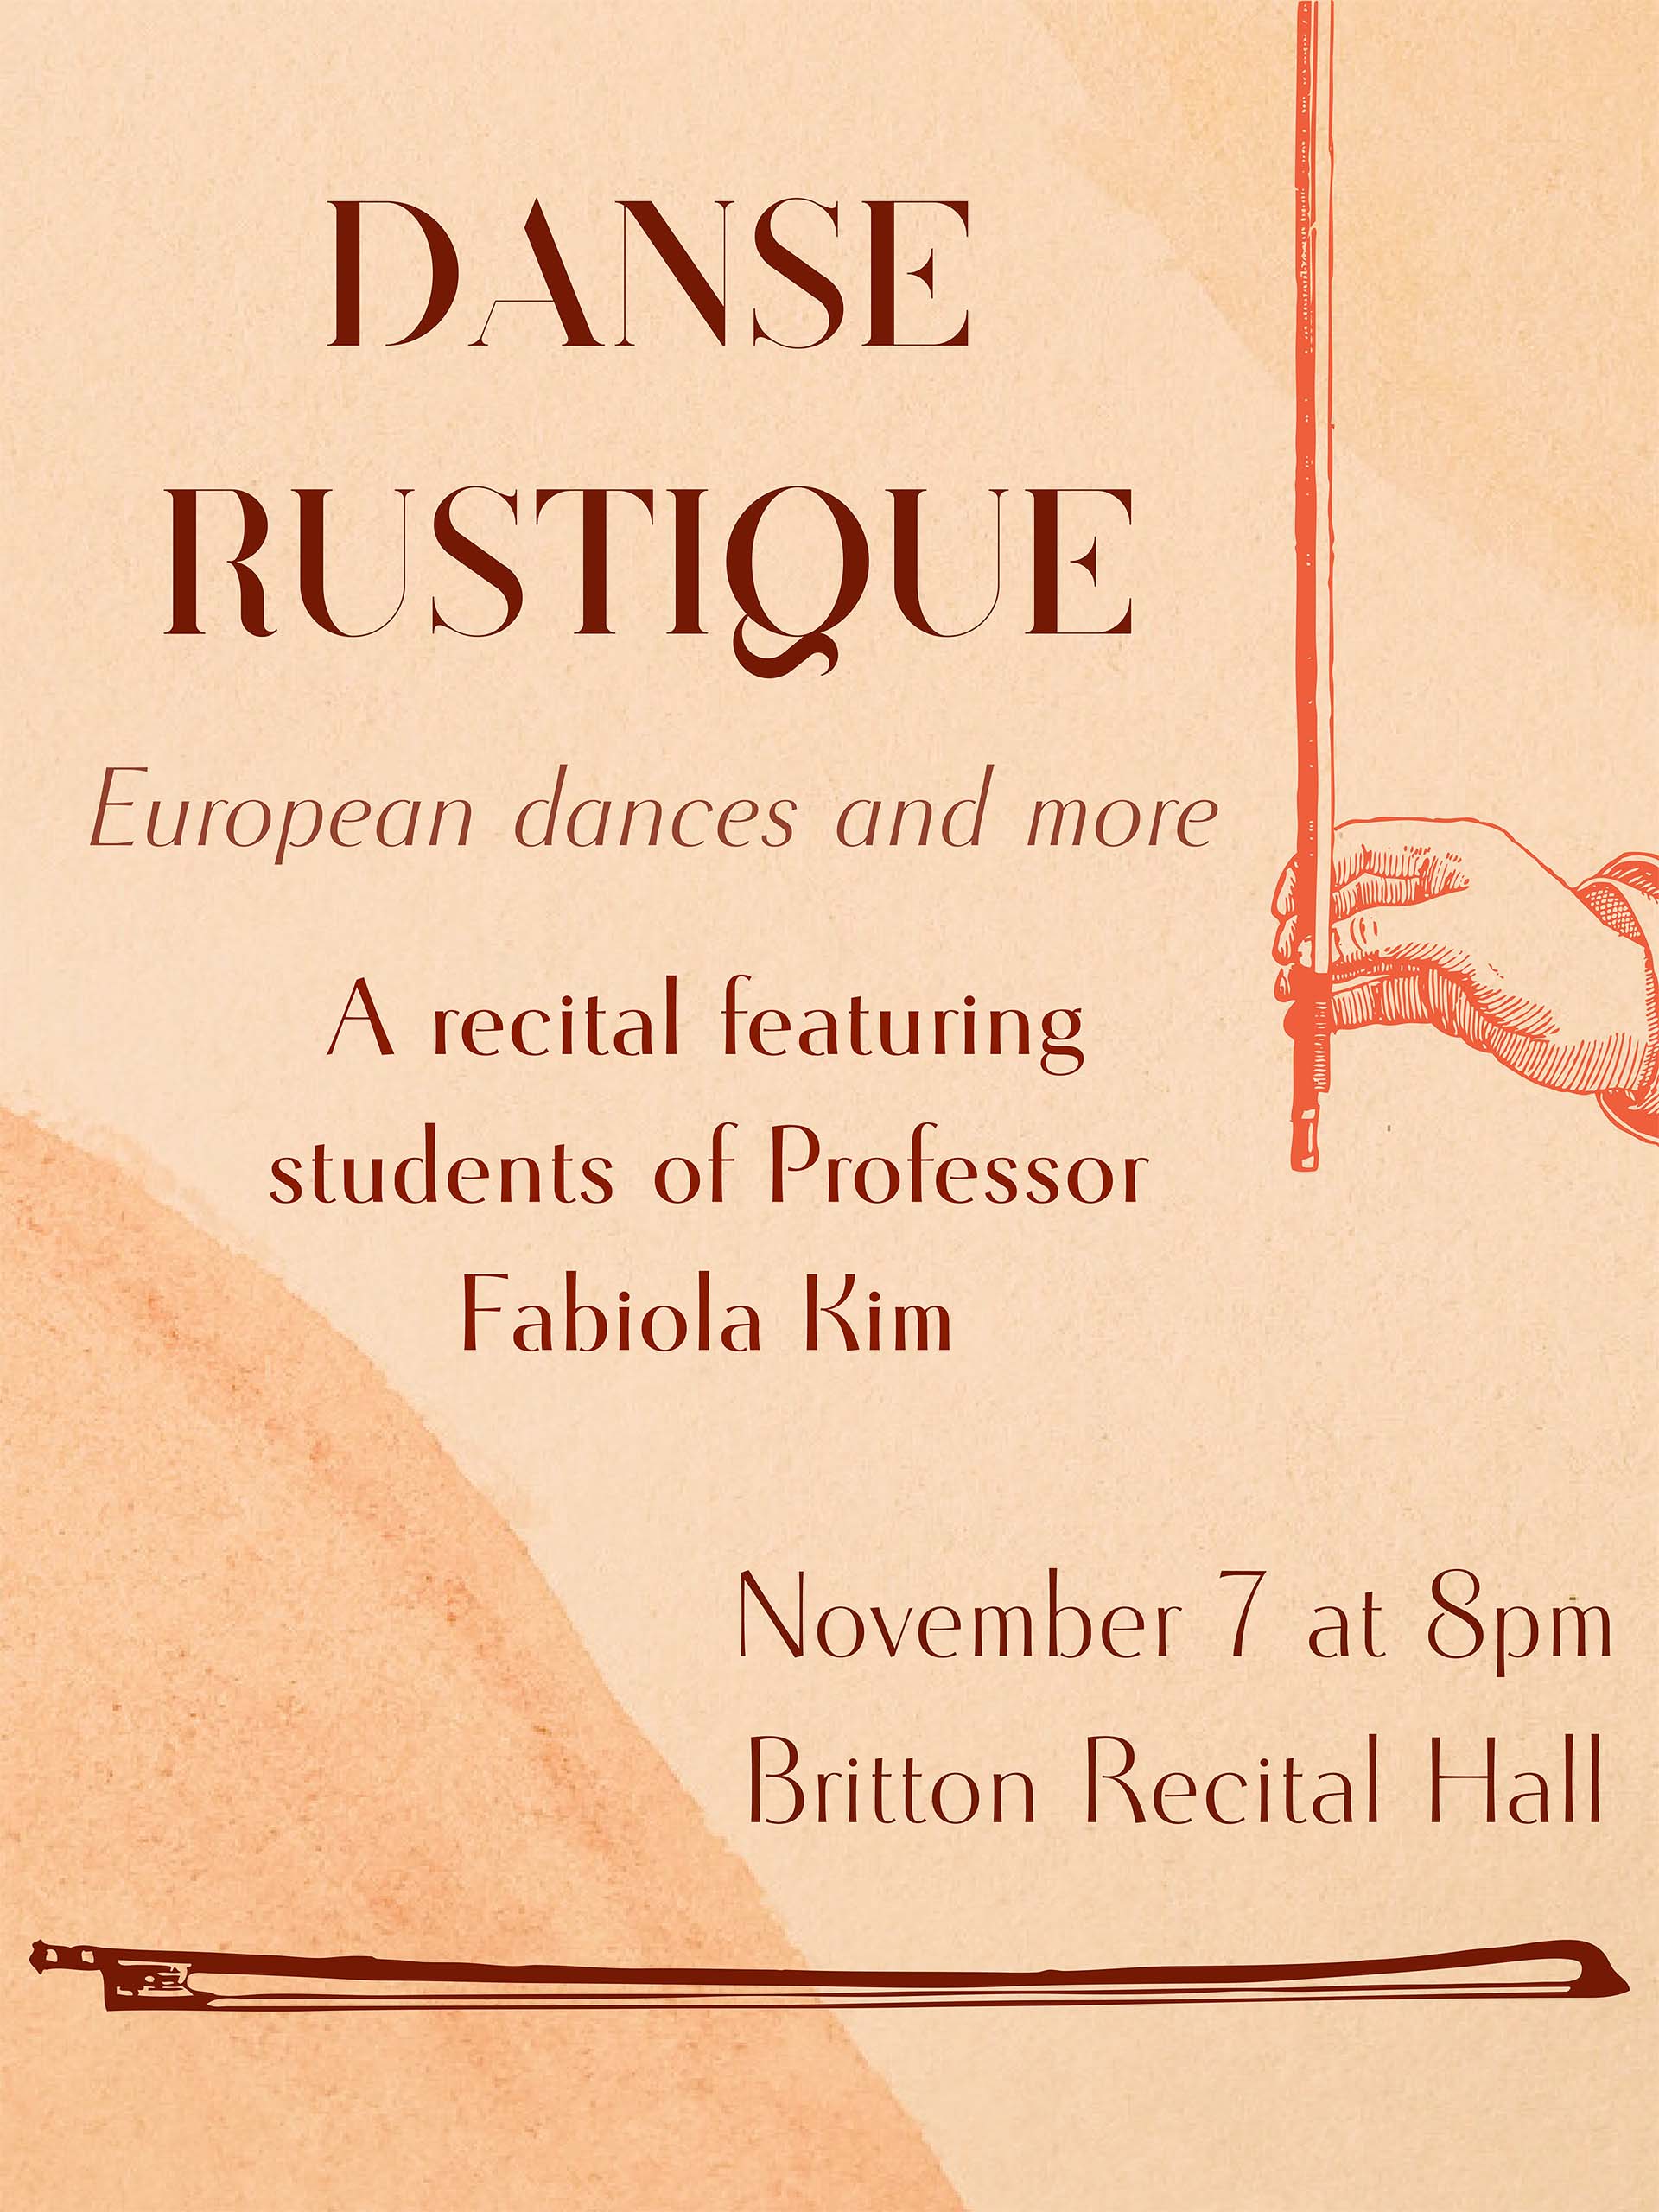 Images of violin bows; "Danse Rustique: European dances and more, A recital featuring students of Professor Fabiola Kim"